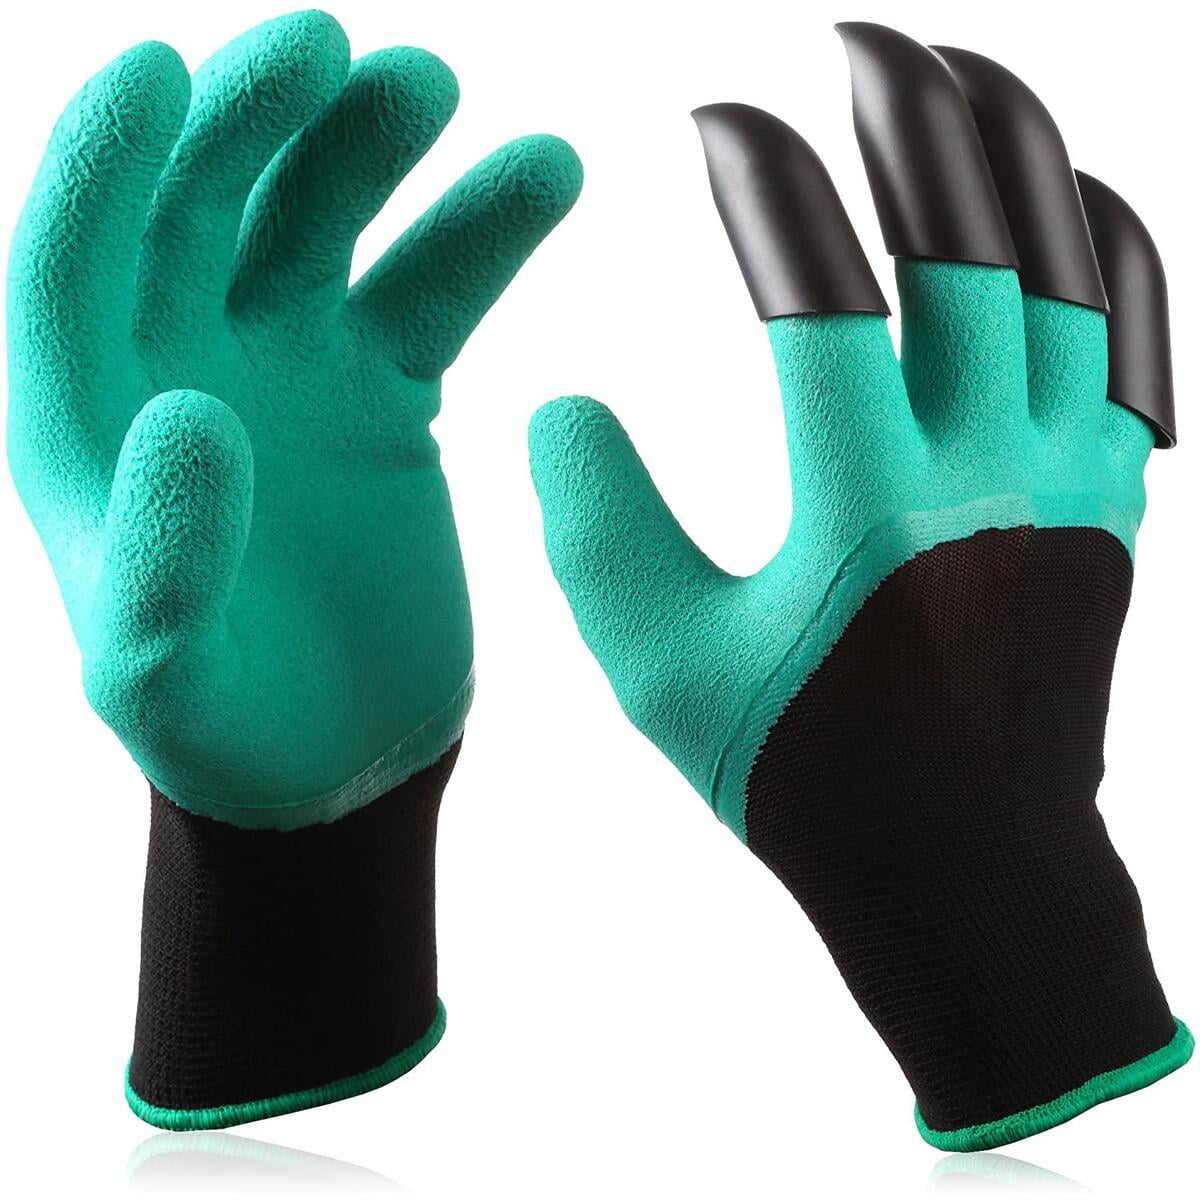 Waterproof Garden Gloves with Claw For Digging Planting Garden Genie Gloves 